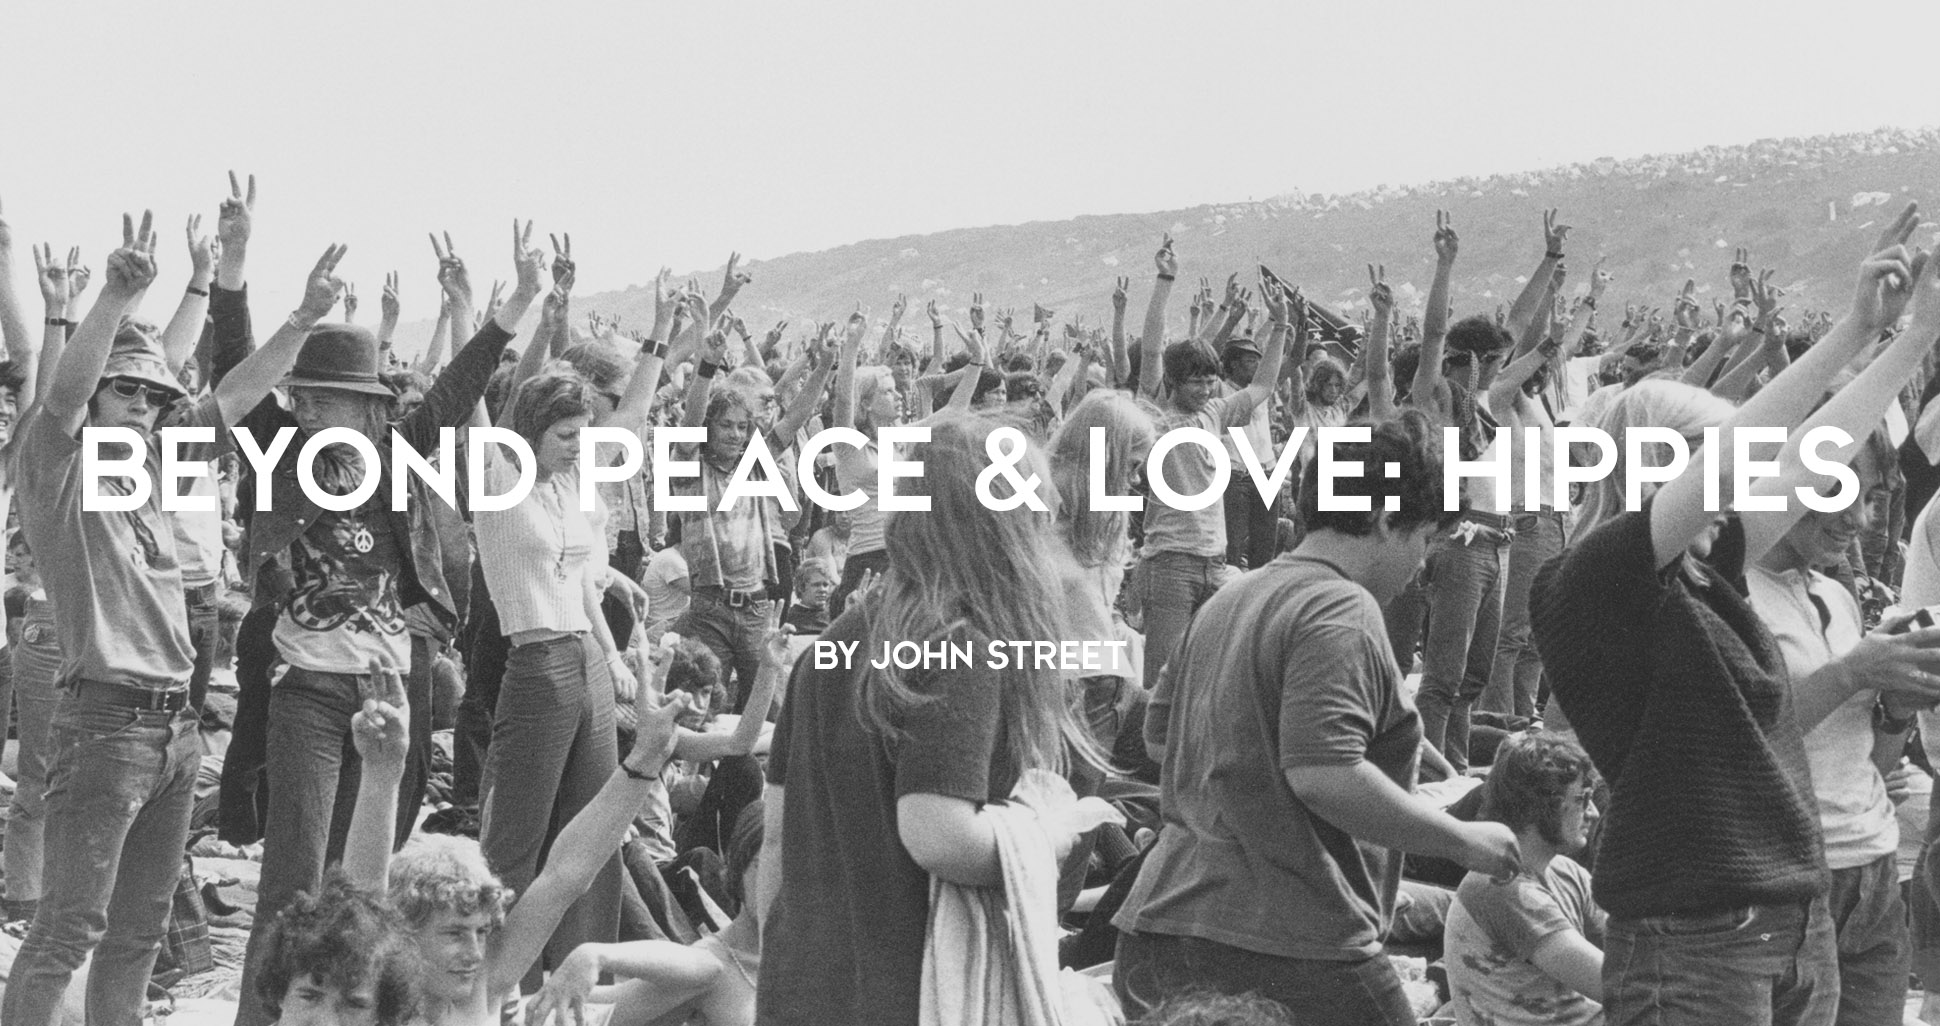 War not movement hippie love make Make love,